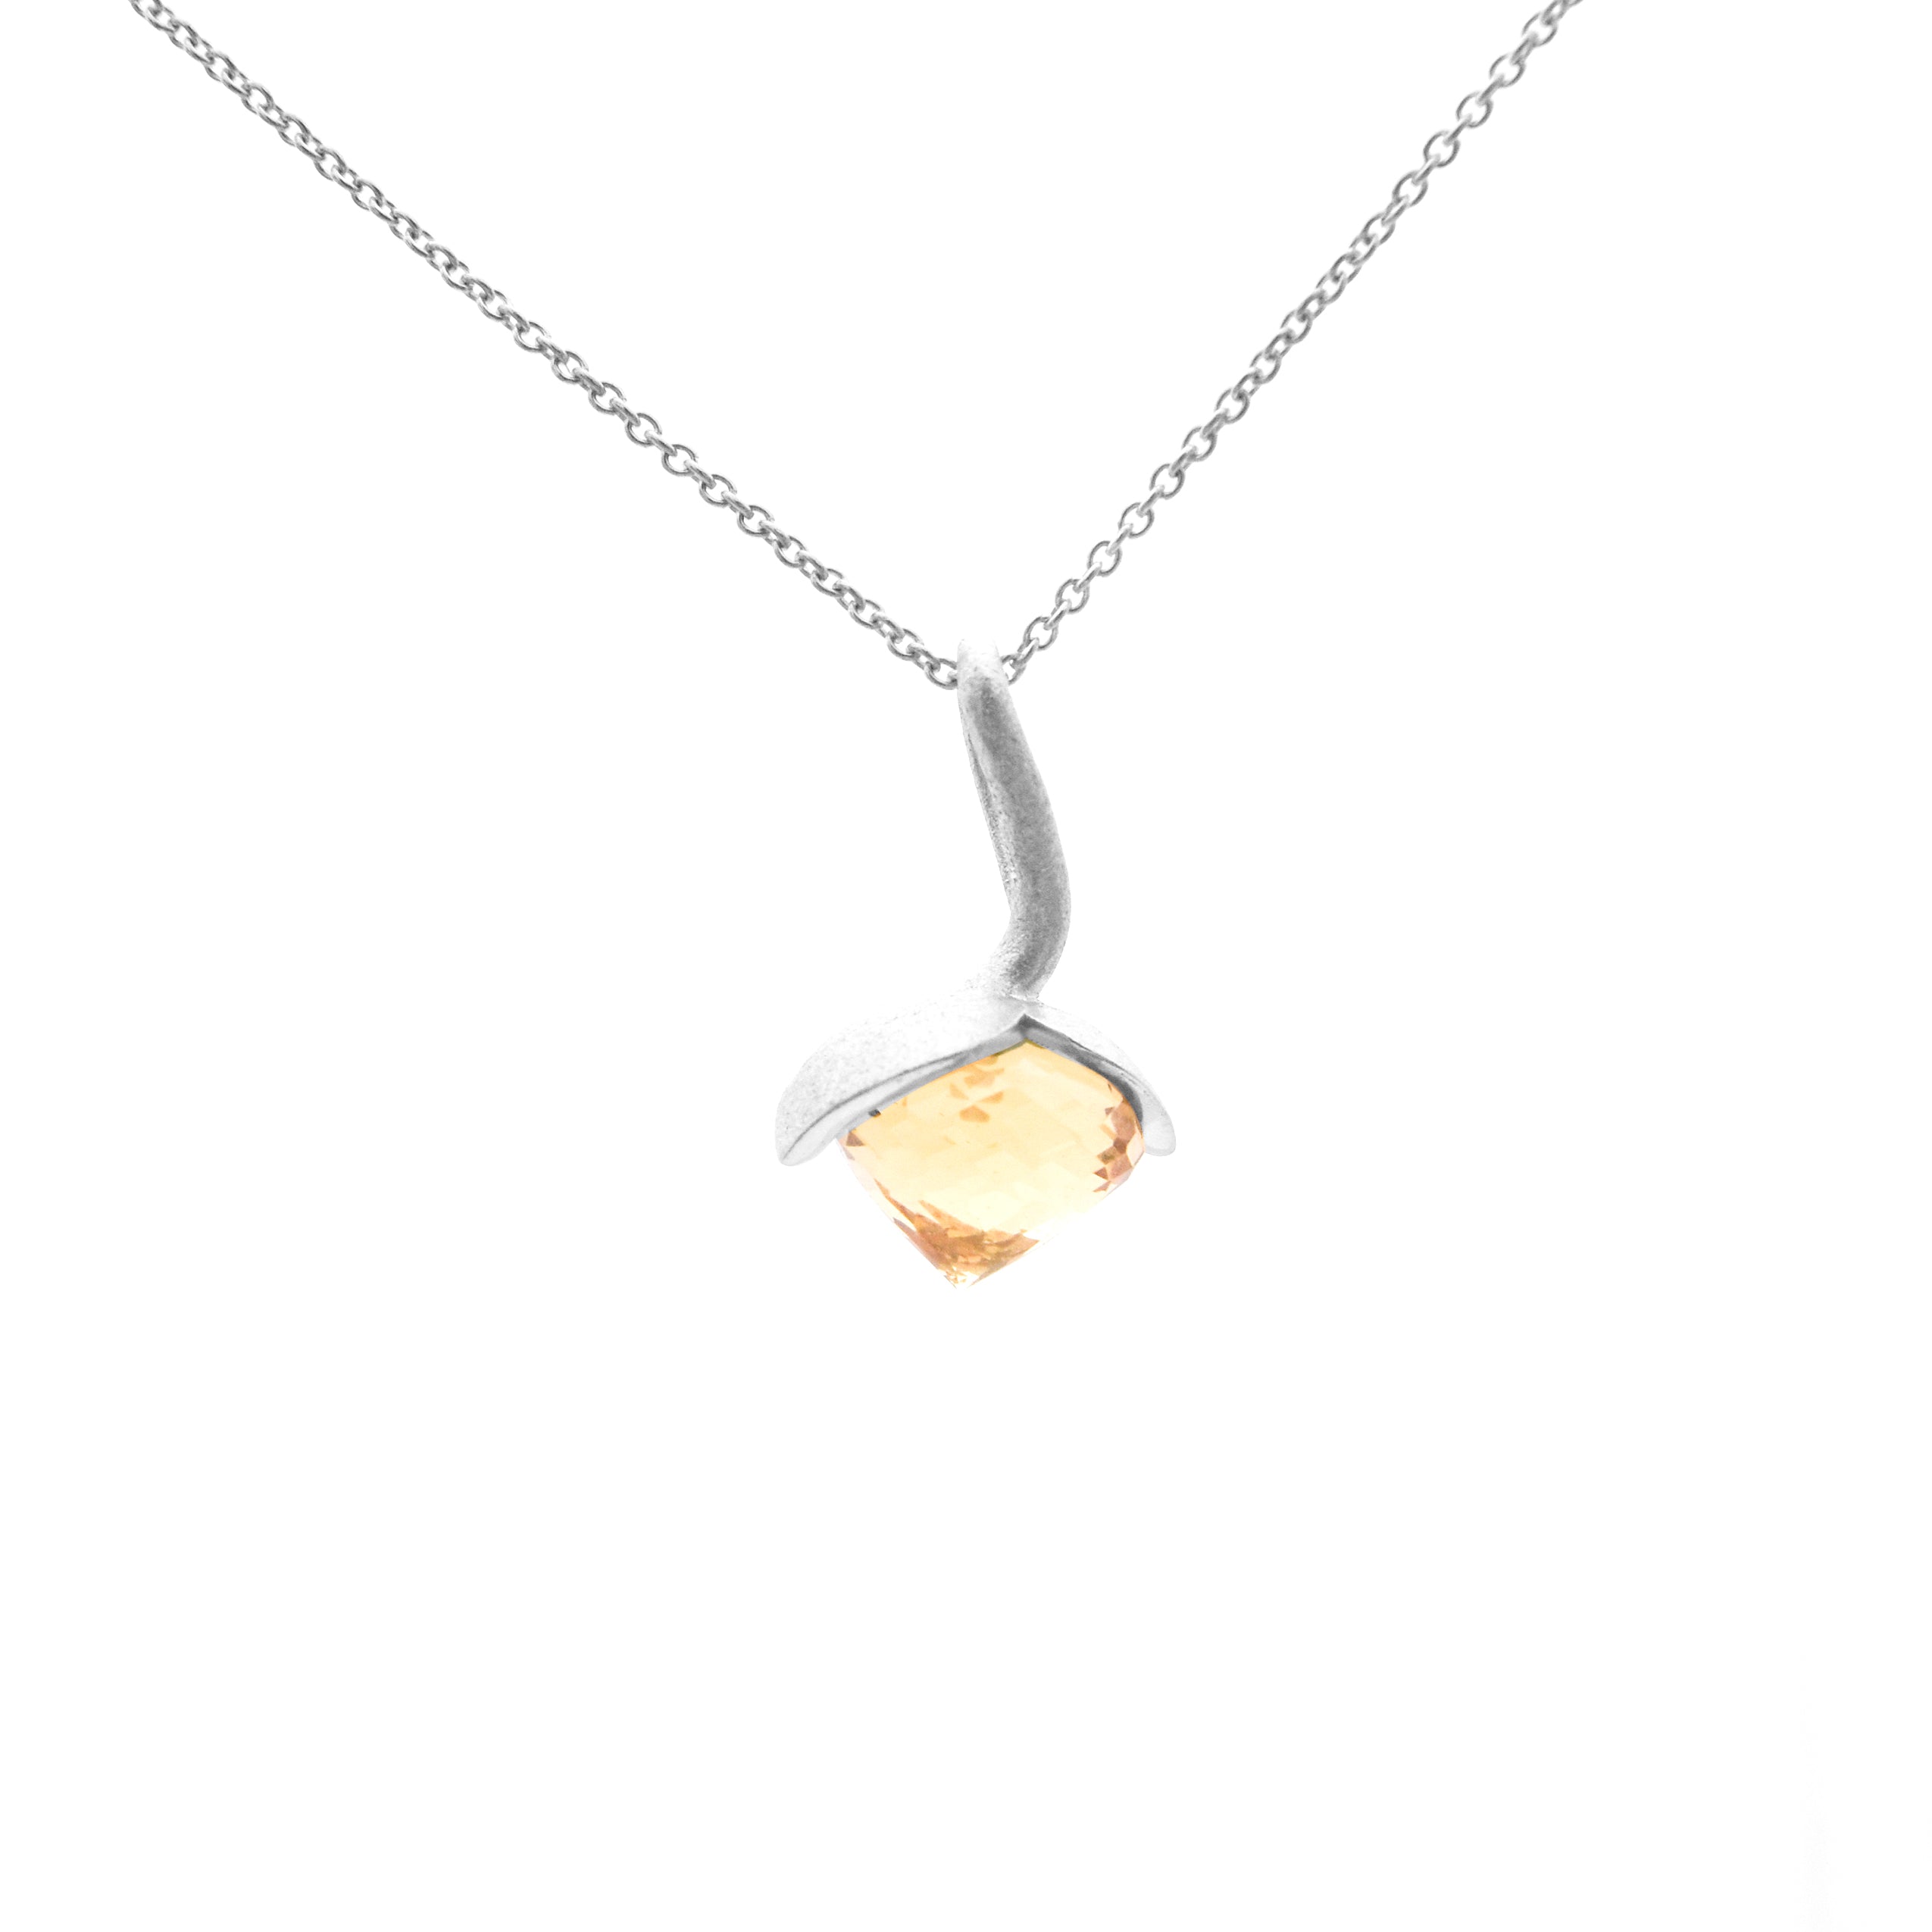 Dolce pendant "medium" with champagne quartz 925/-